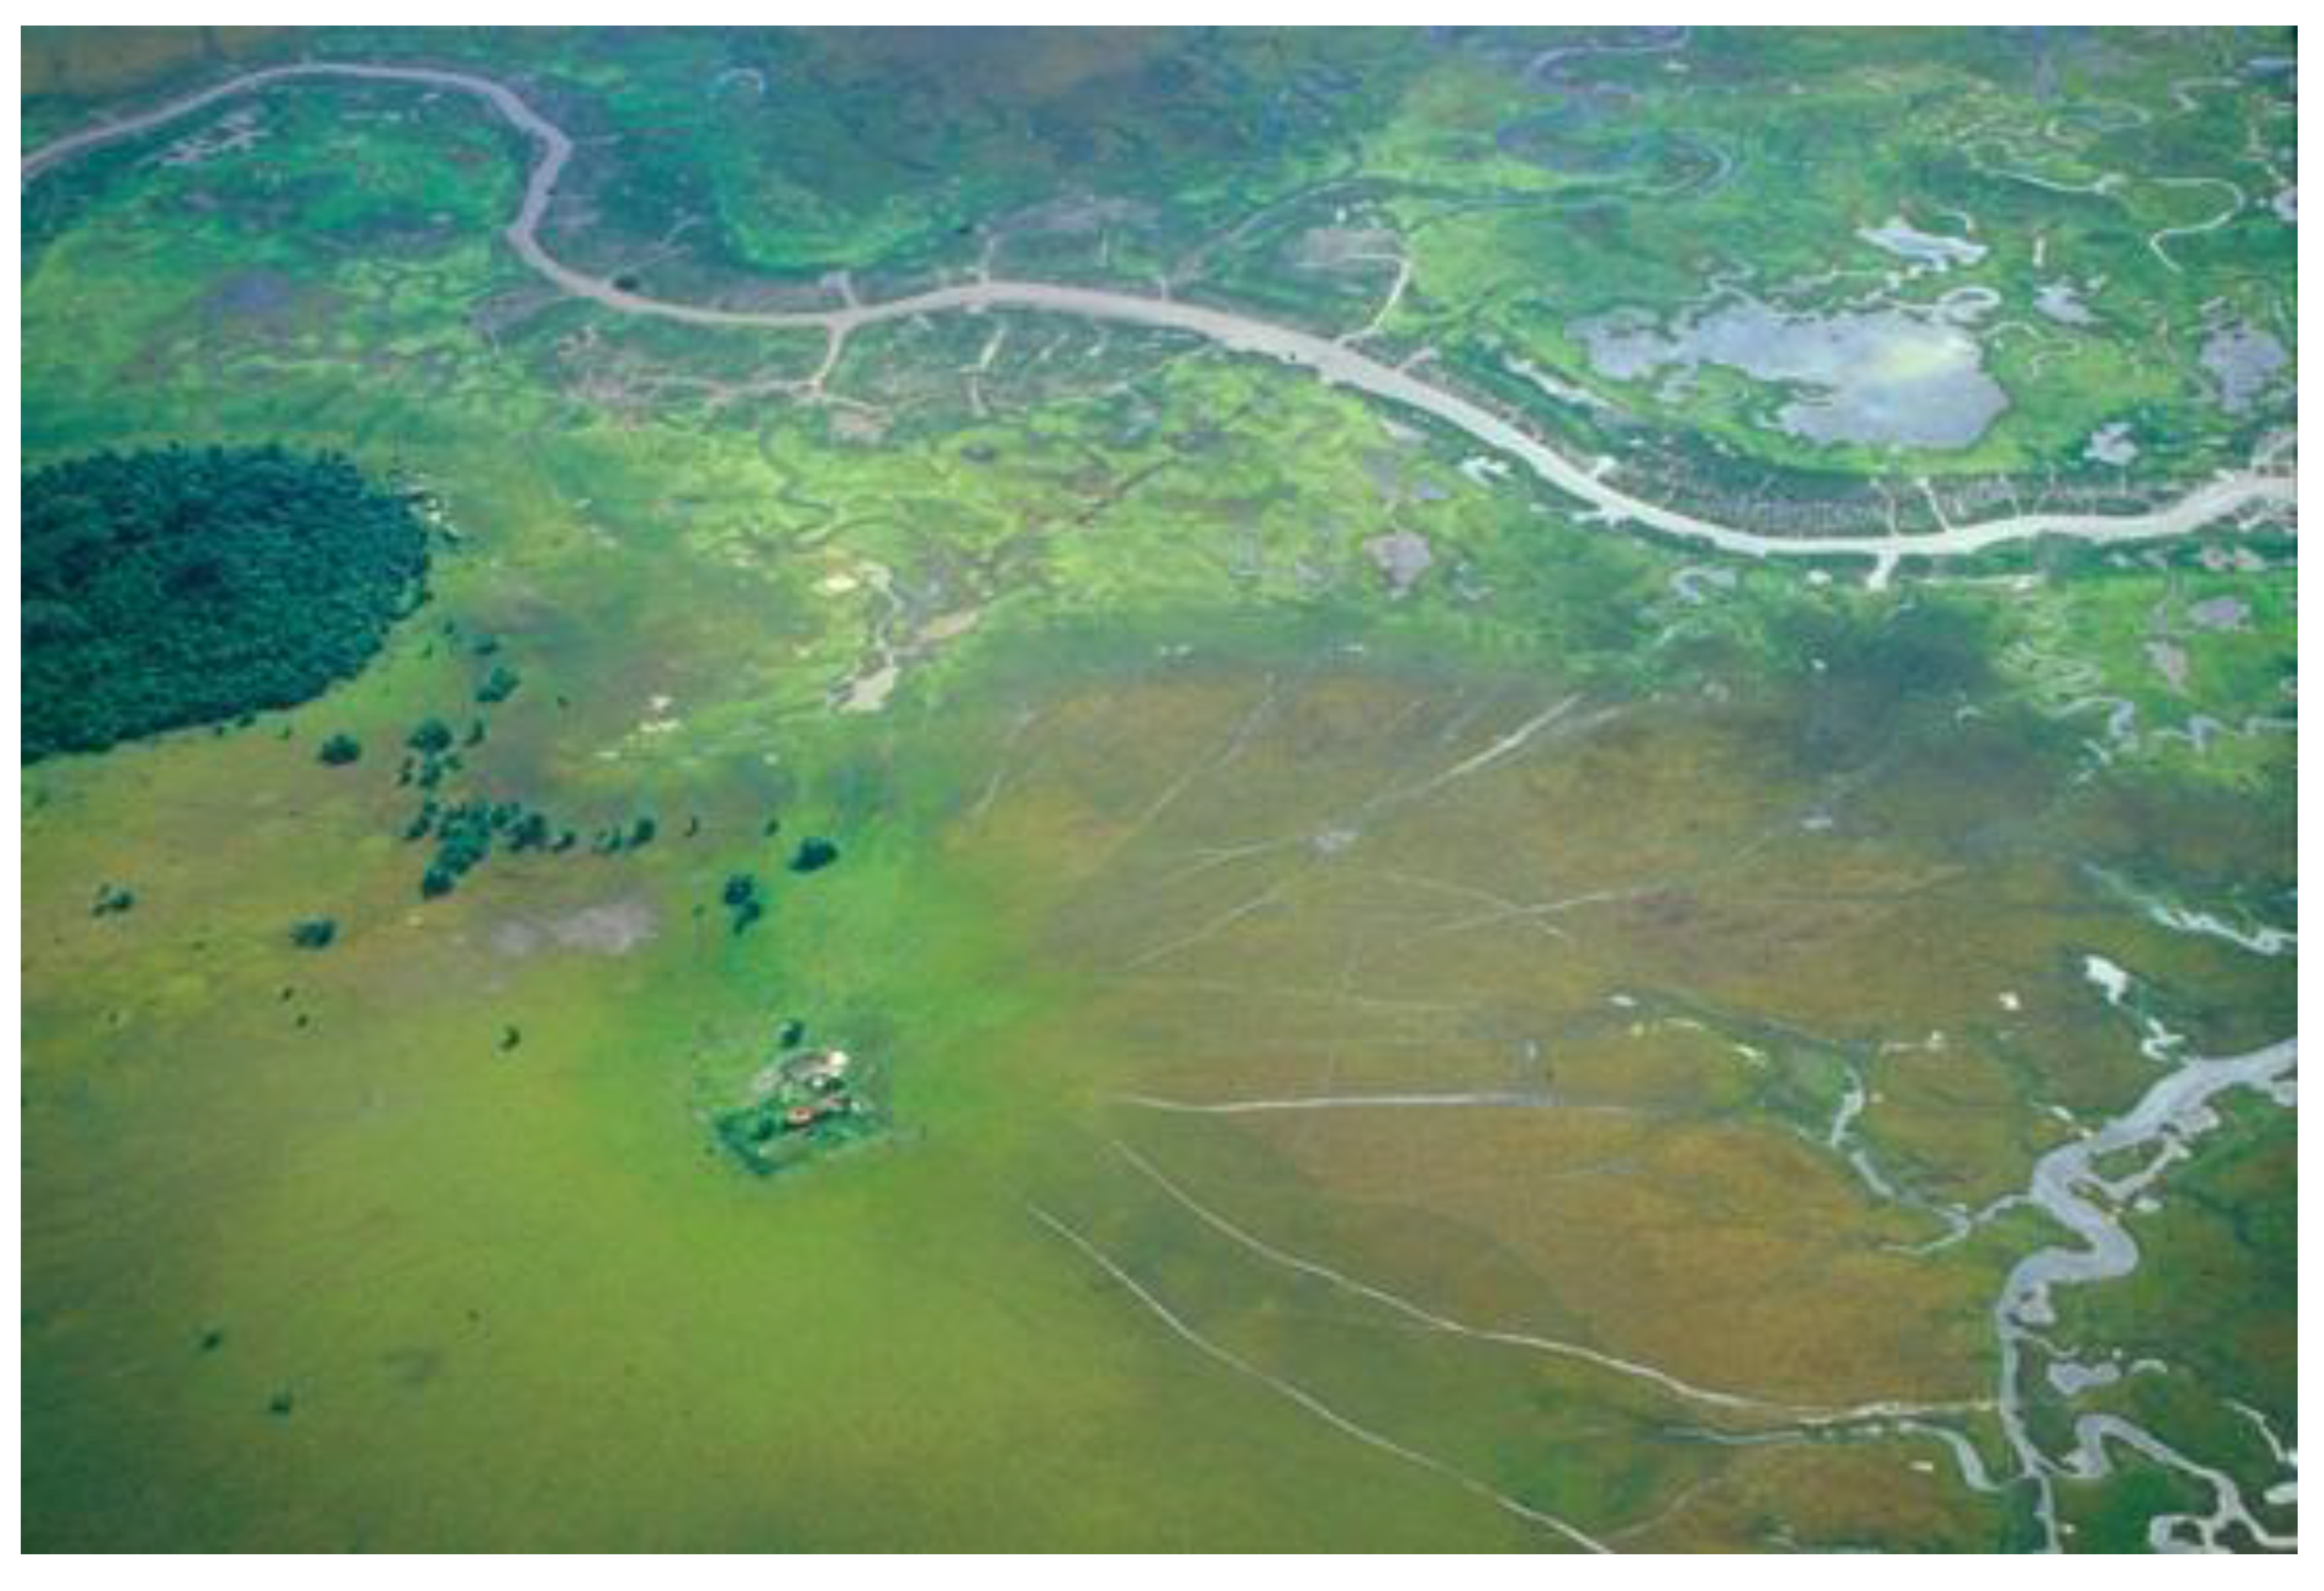 Diversity | Free Full-Text | Long-Term Human Induced Impacts on Marajó  Island Landscapes, Amazon Estuary